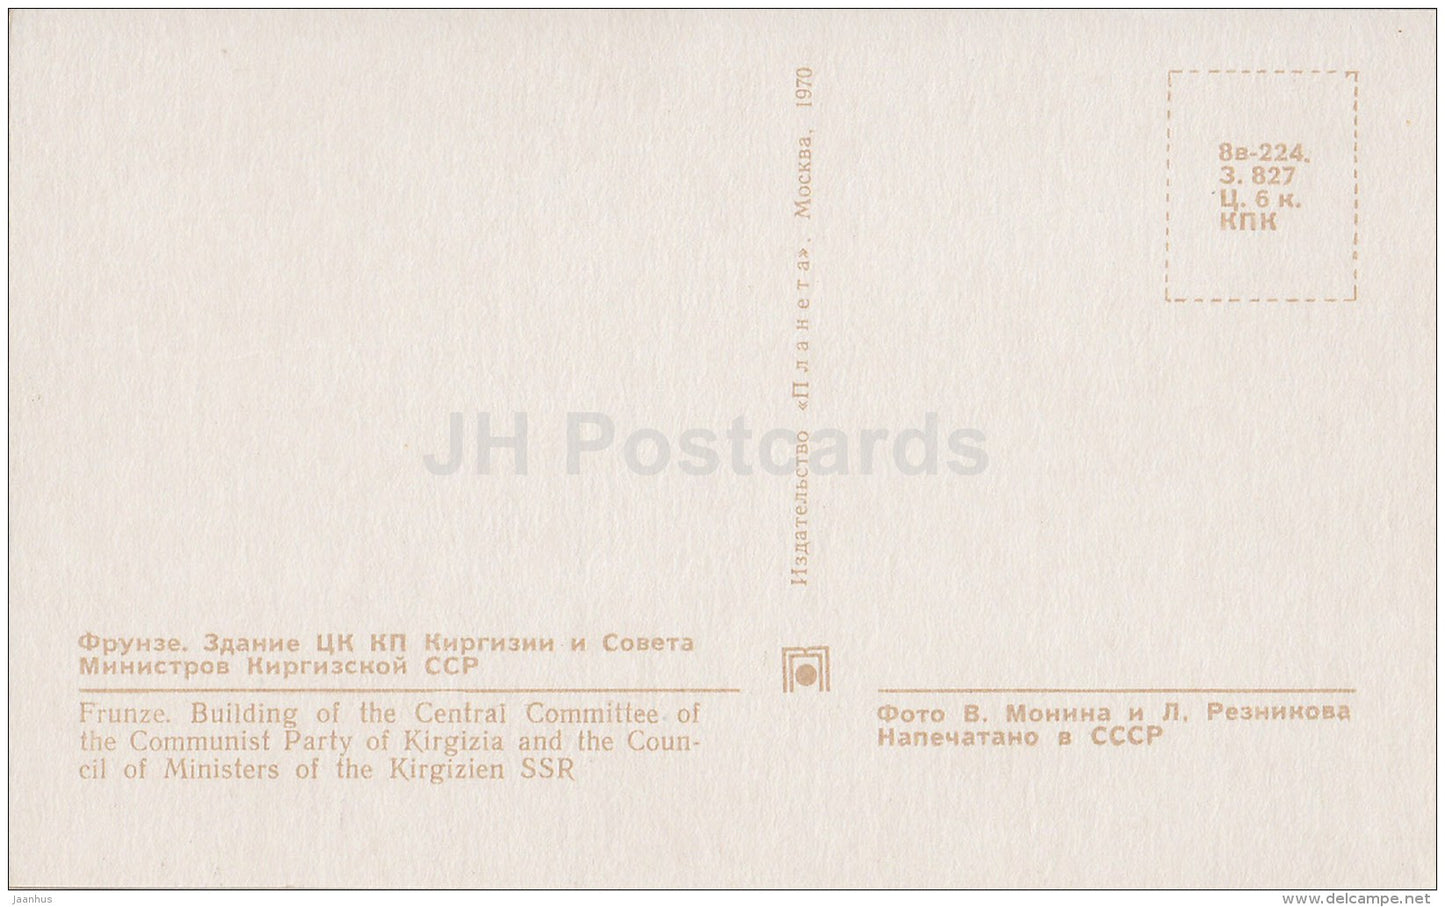 Central Committee of the Communist Party - Bishkek - Frunze - 1970 - Kyrgystan USSR - unused - JH Postcards